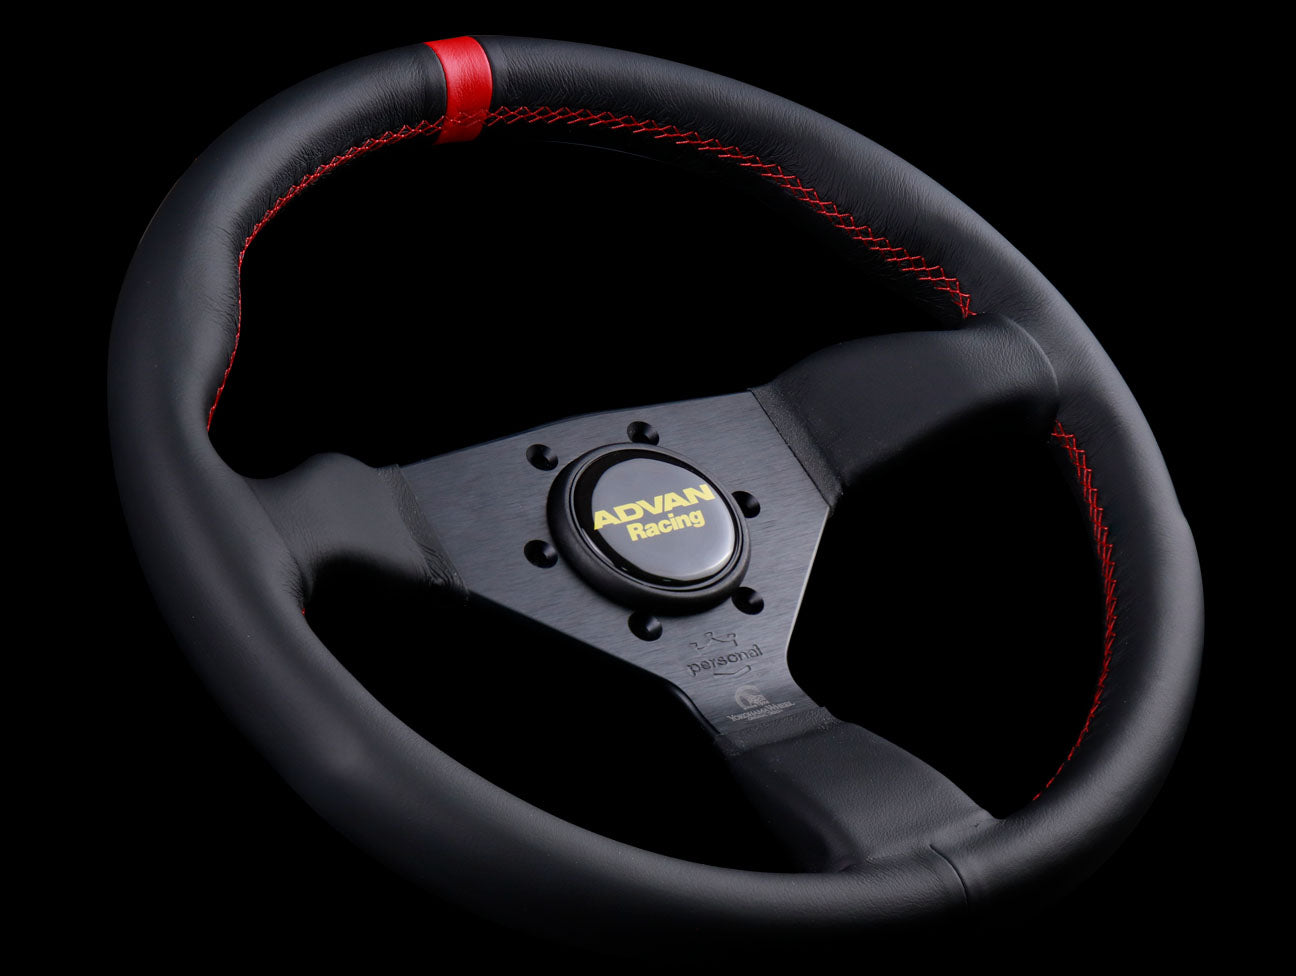 Advan x Personal Steering Wheel